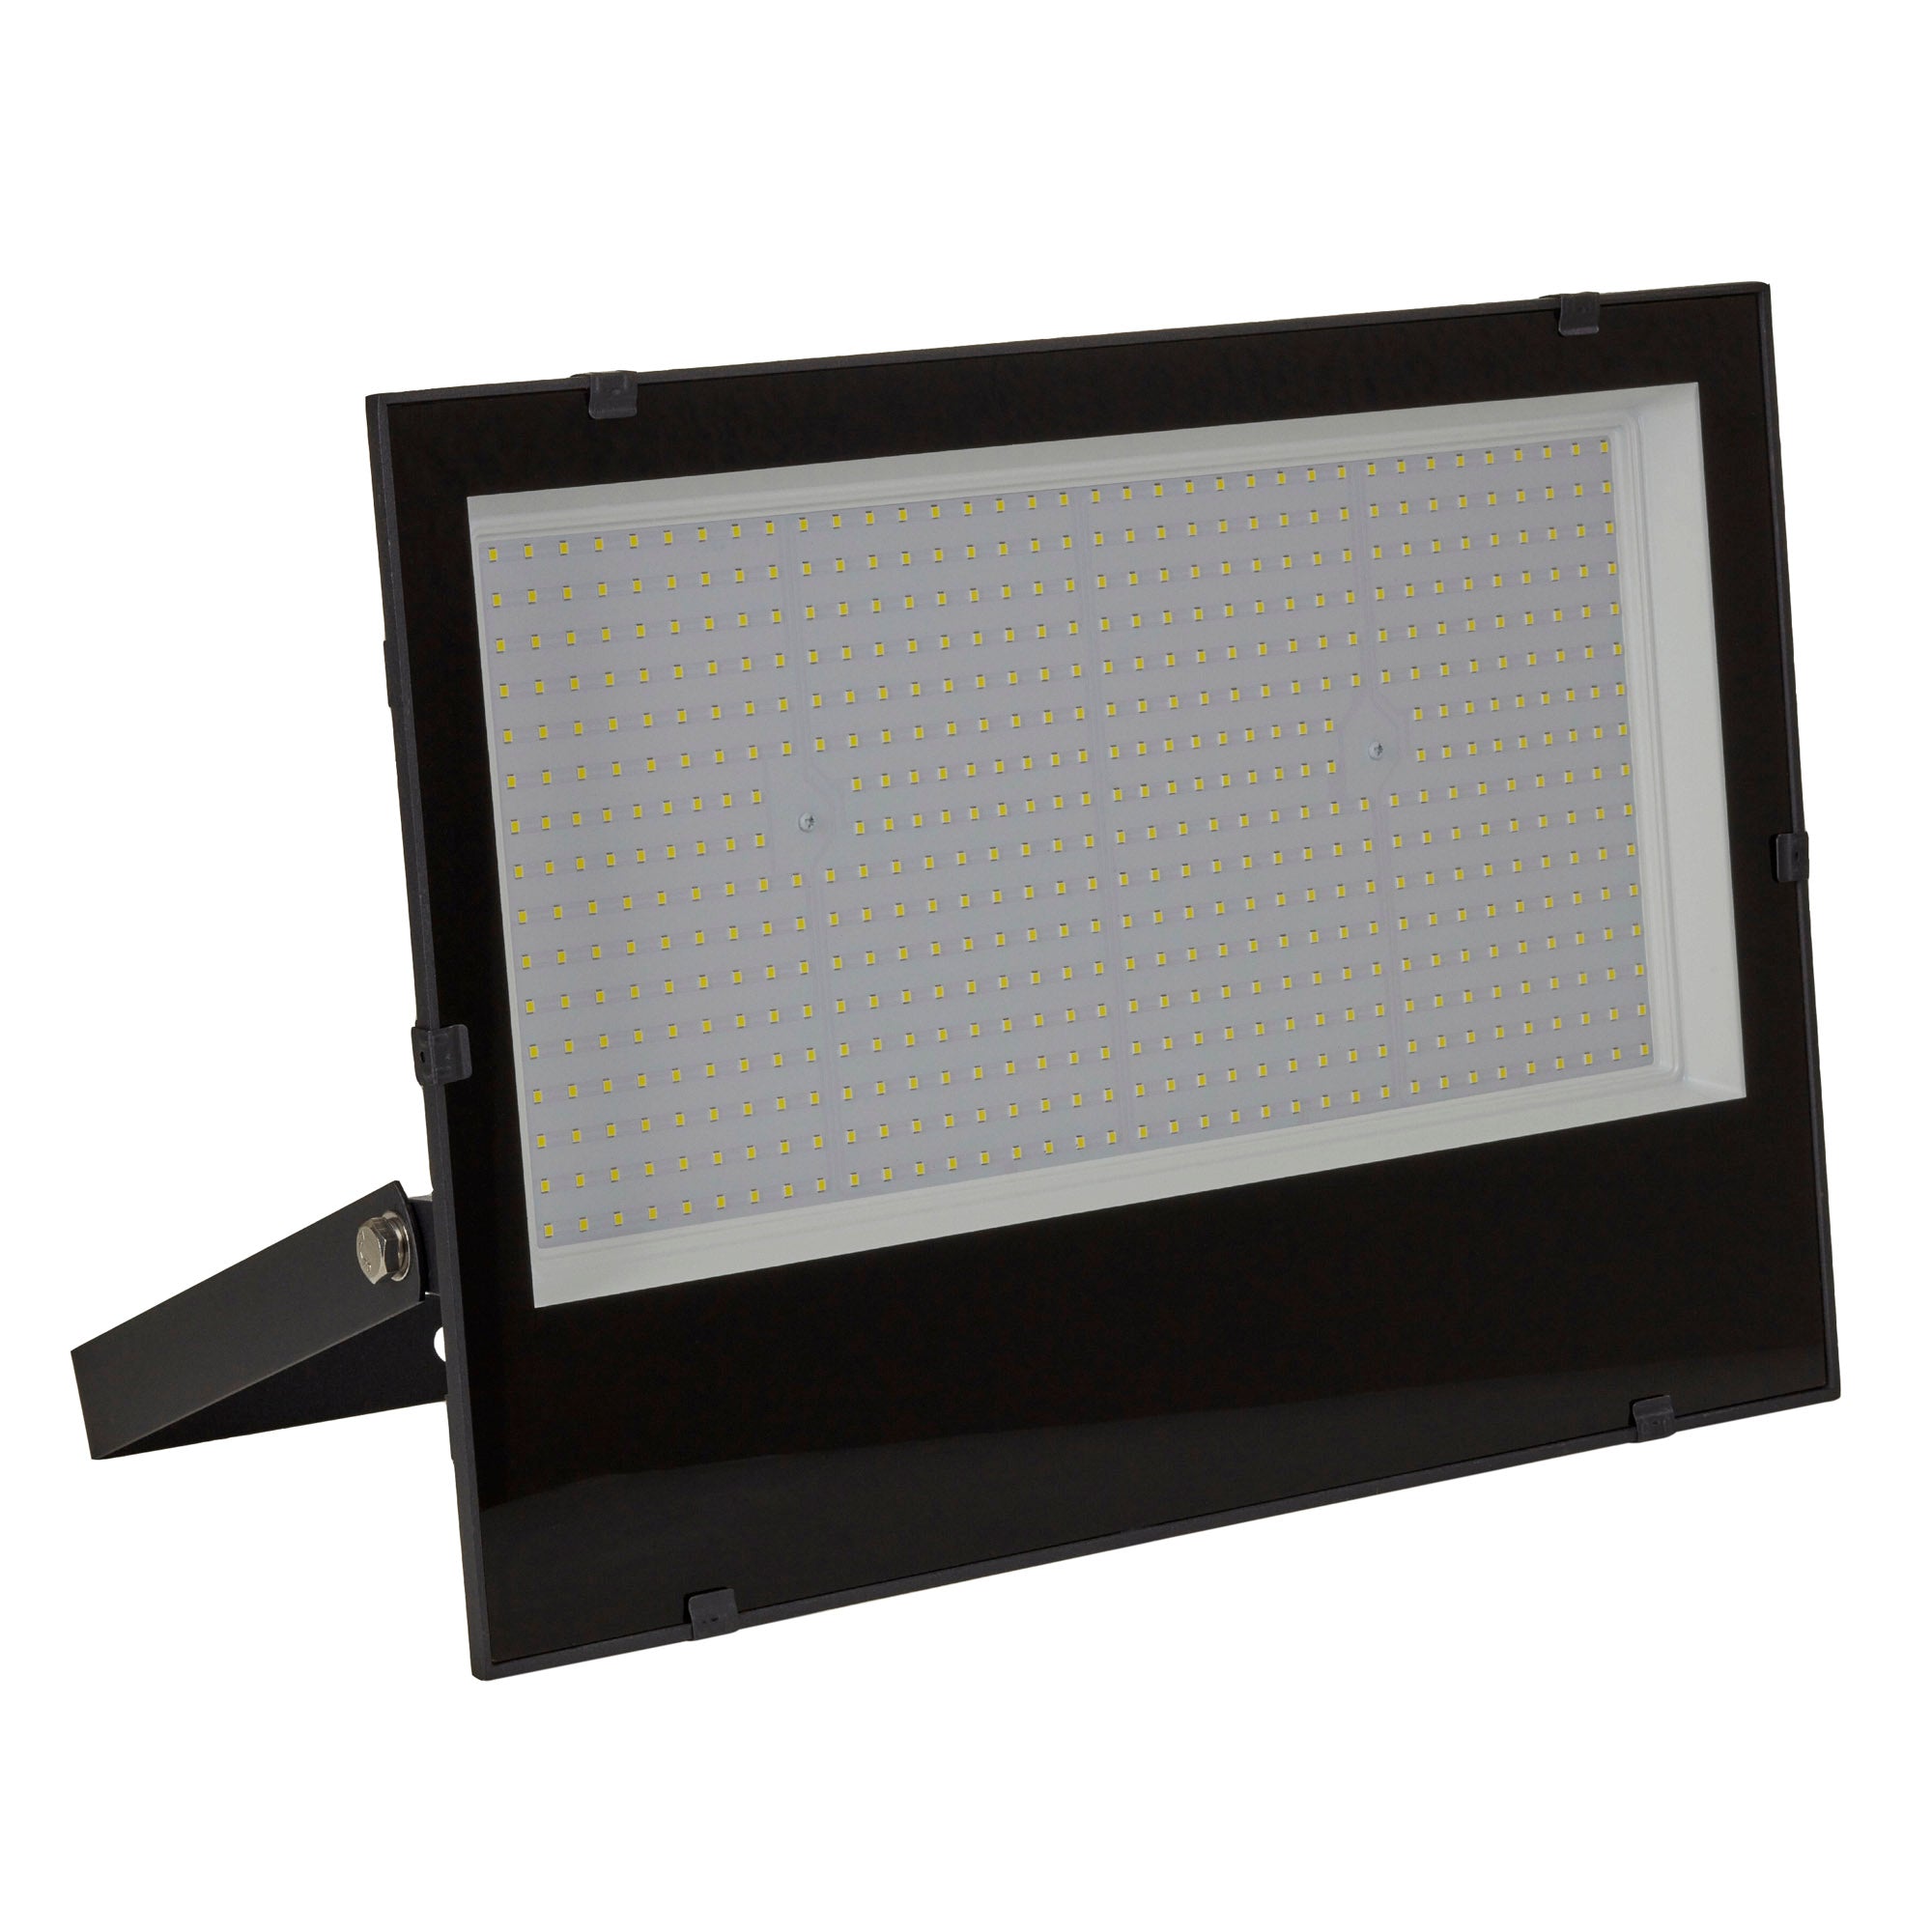 Reflector LED de sobreponer en piso negro 400 W 100-277 V~ RL-36400.N, Illux